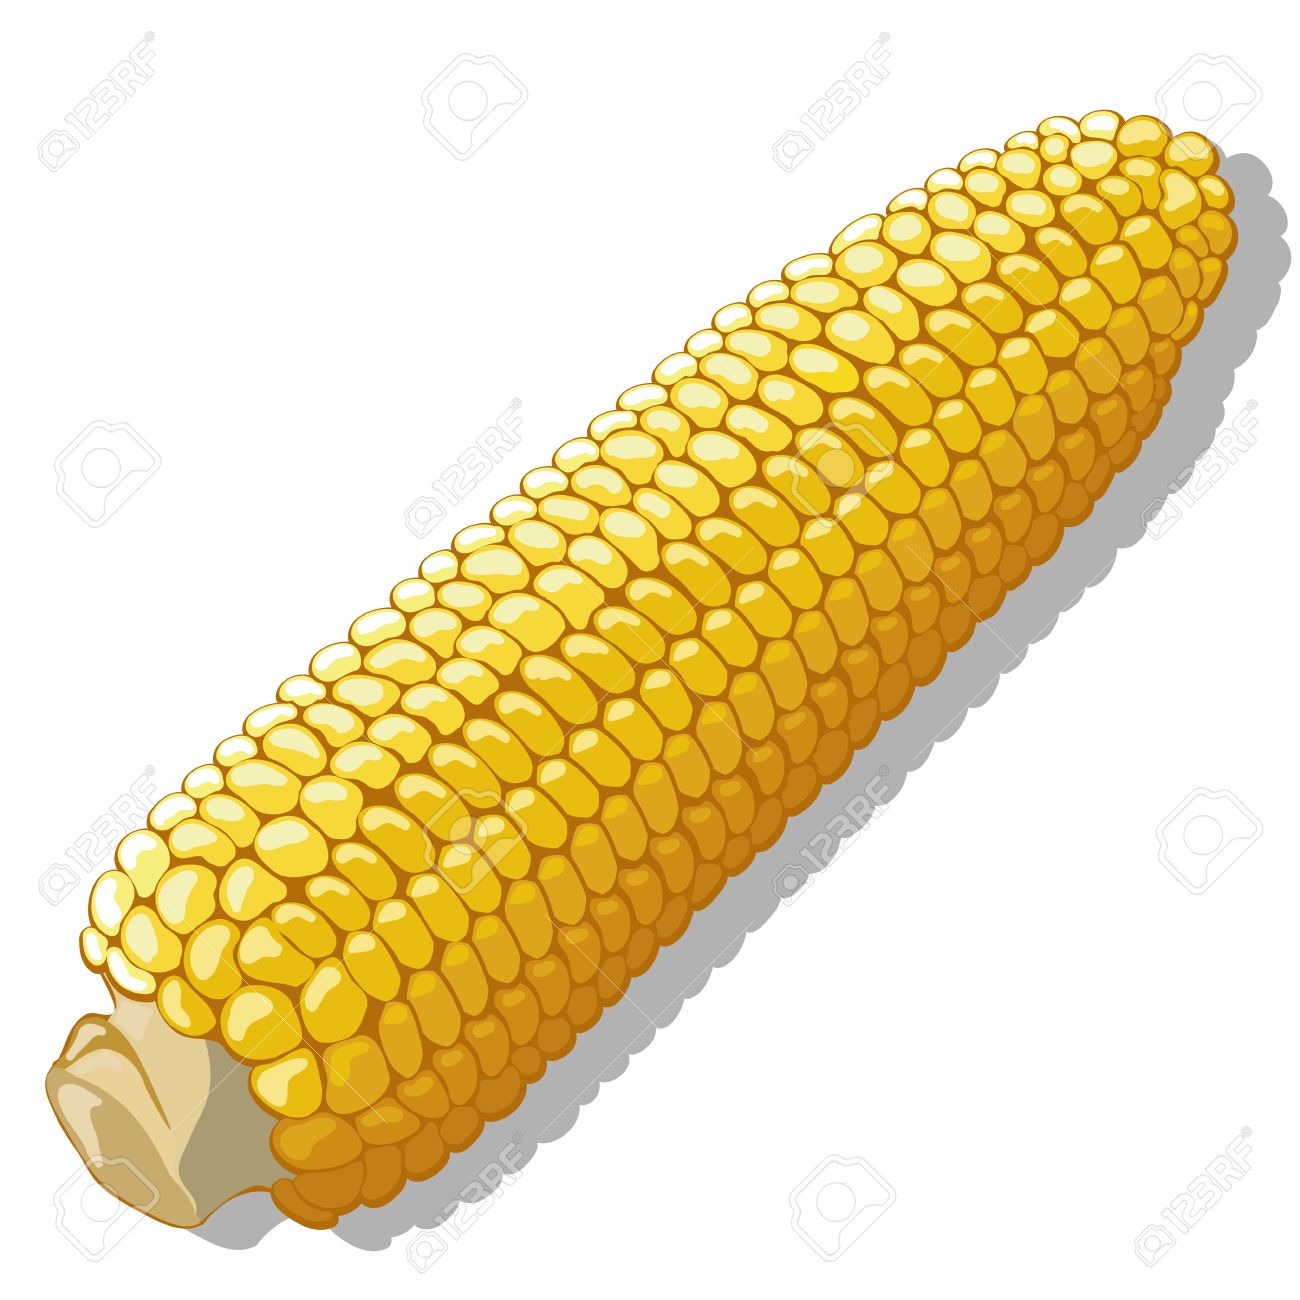 Indian Corn Clipart